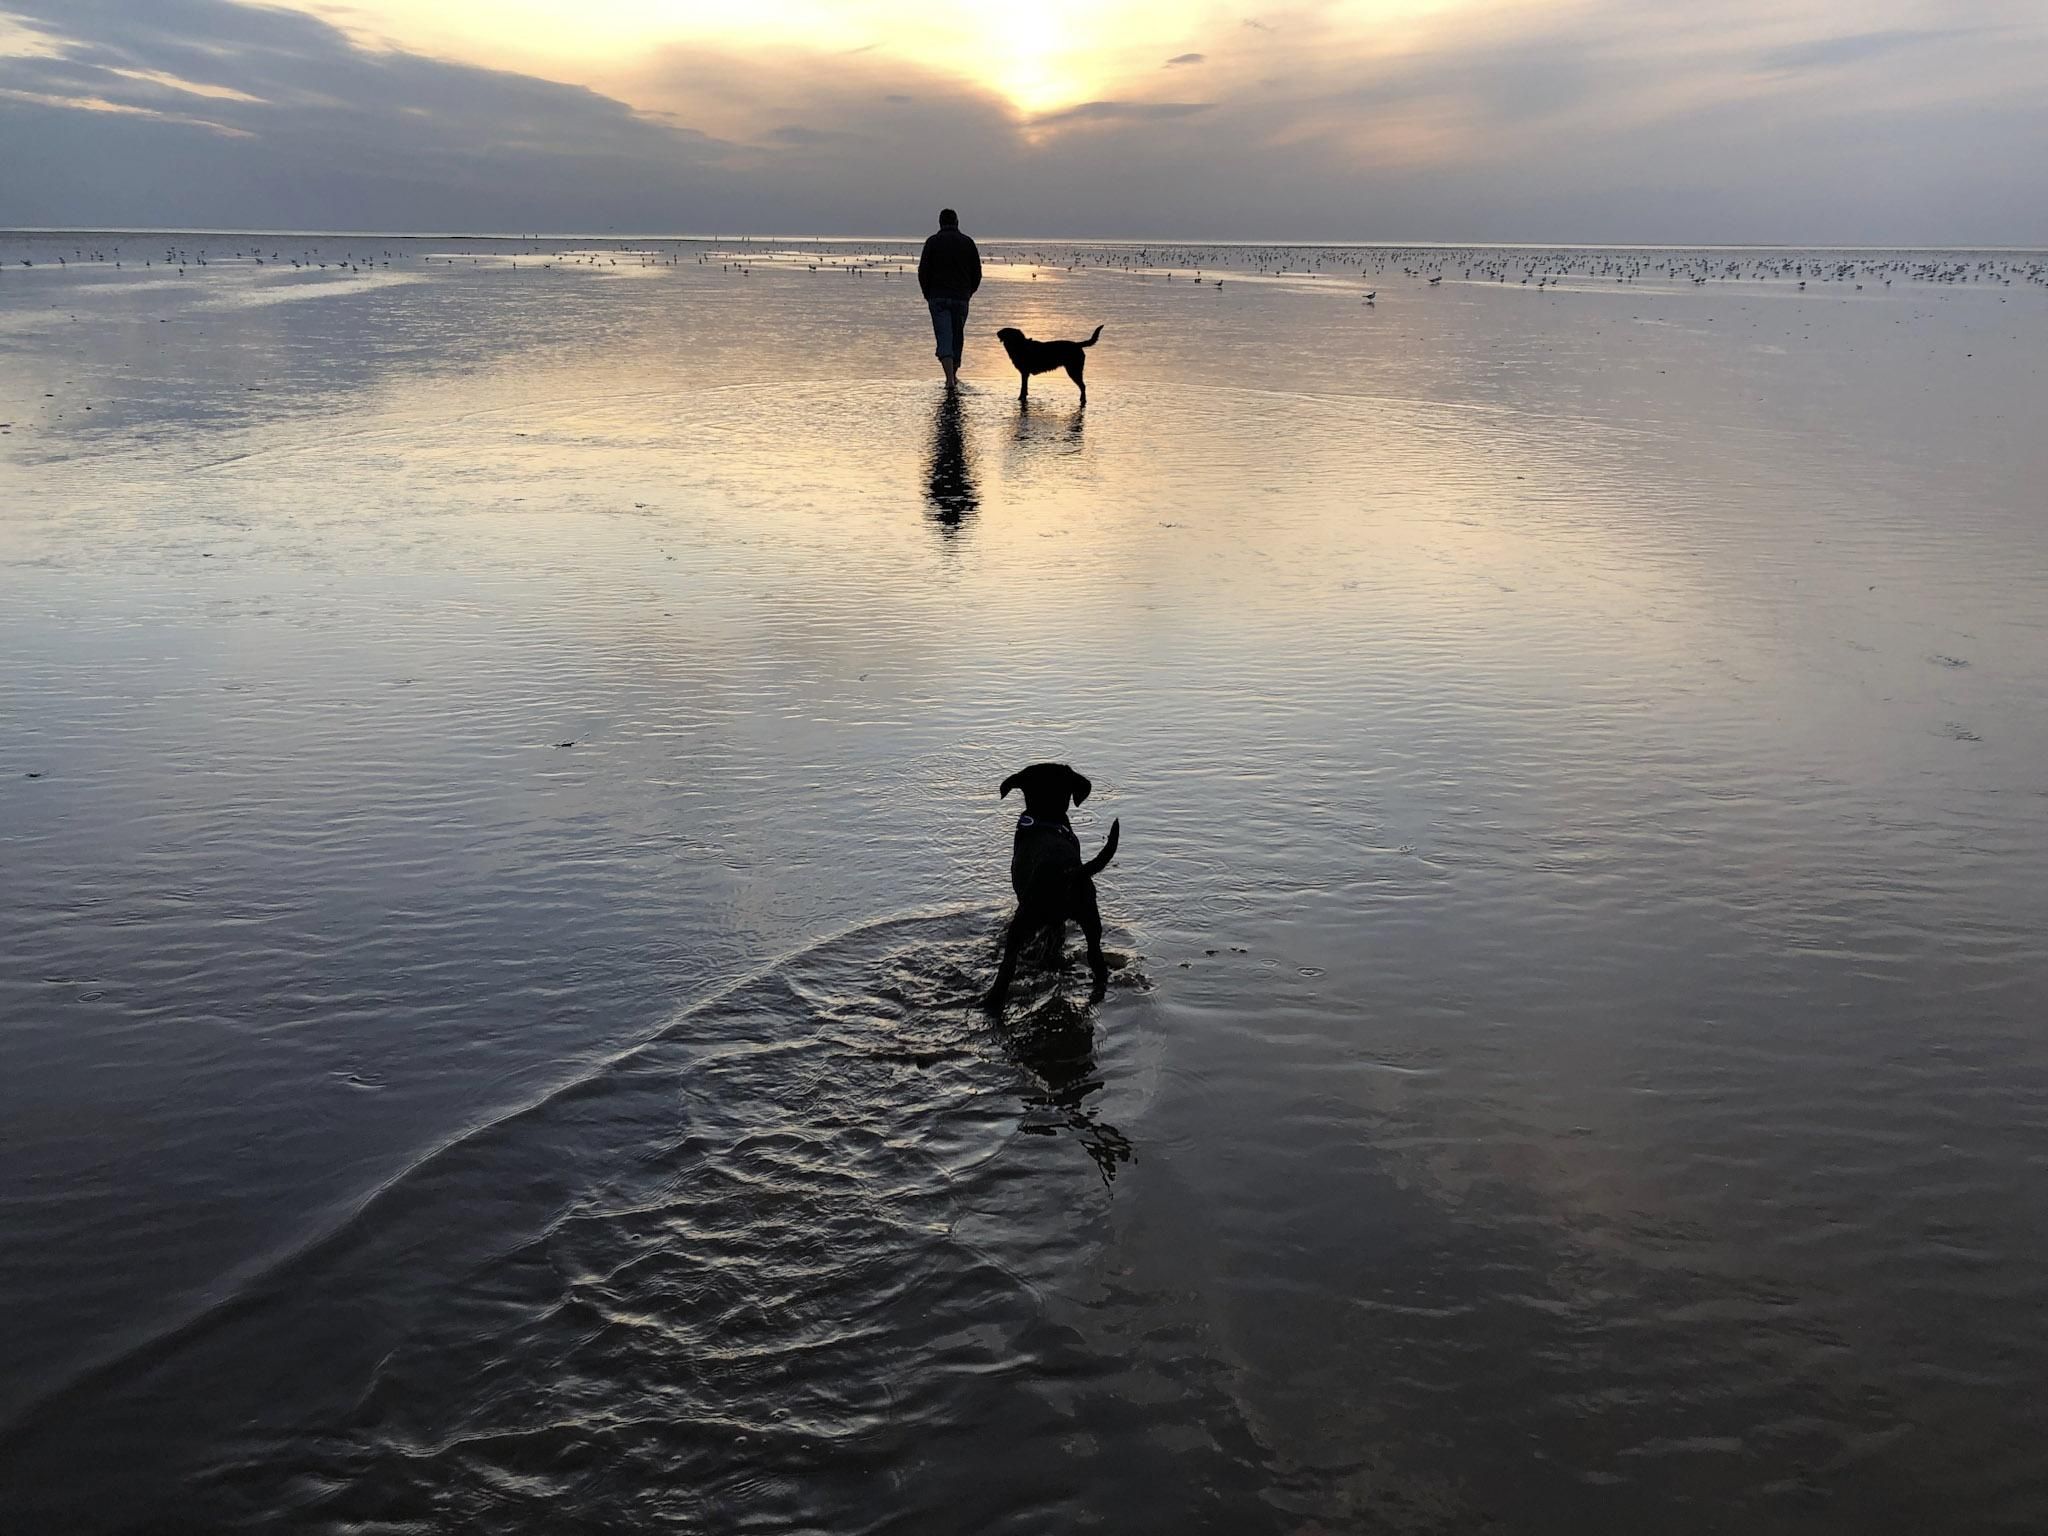 Camping hunstanton: Dogs following man in water